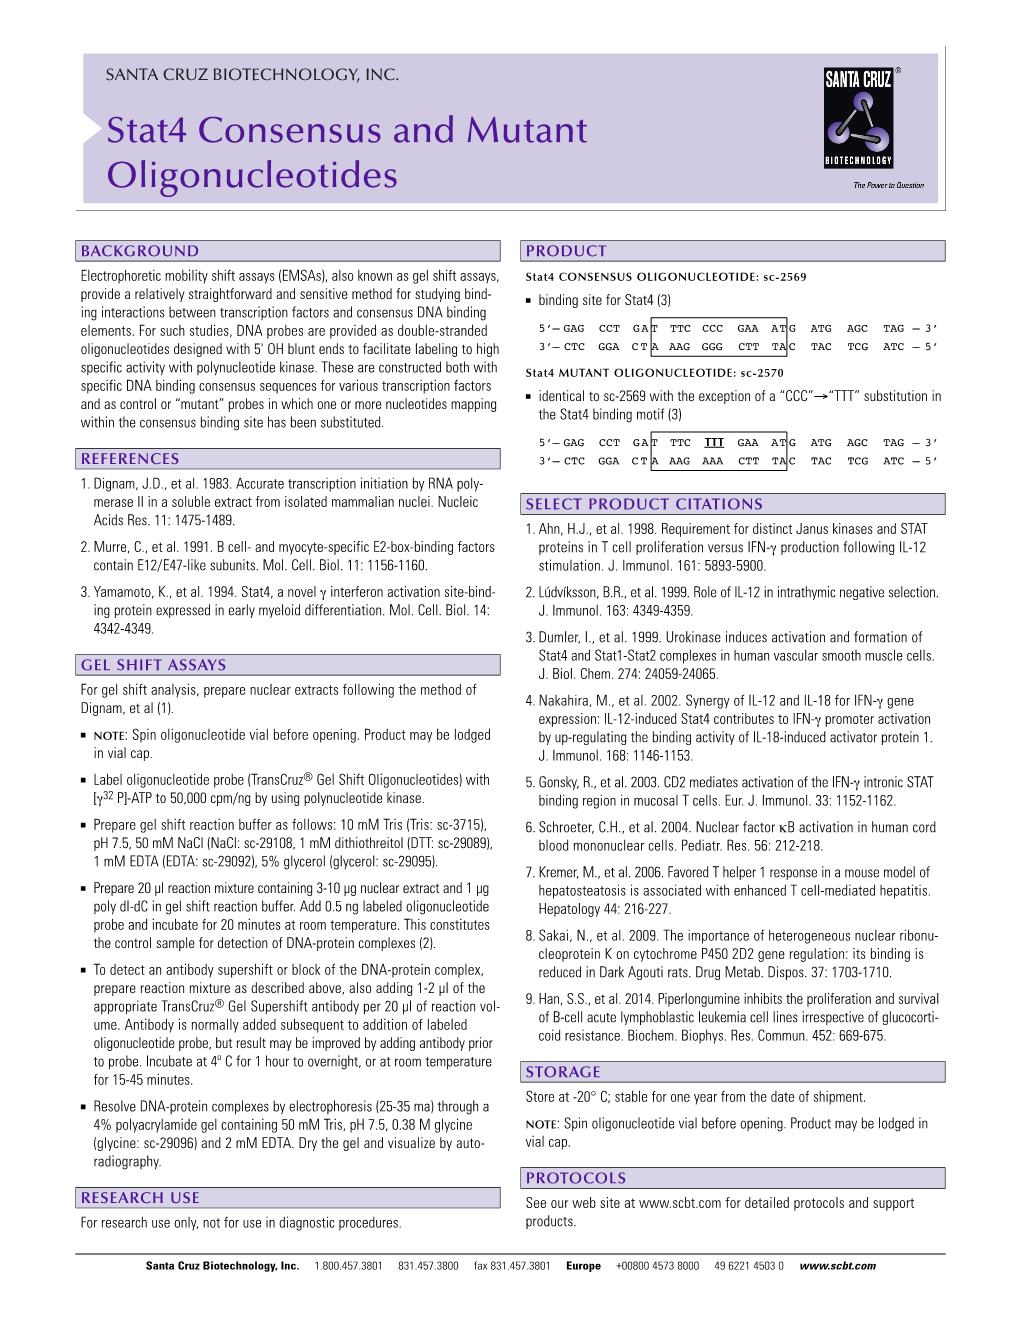 Stat4 Consensus and Mutant Oligonucleotides